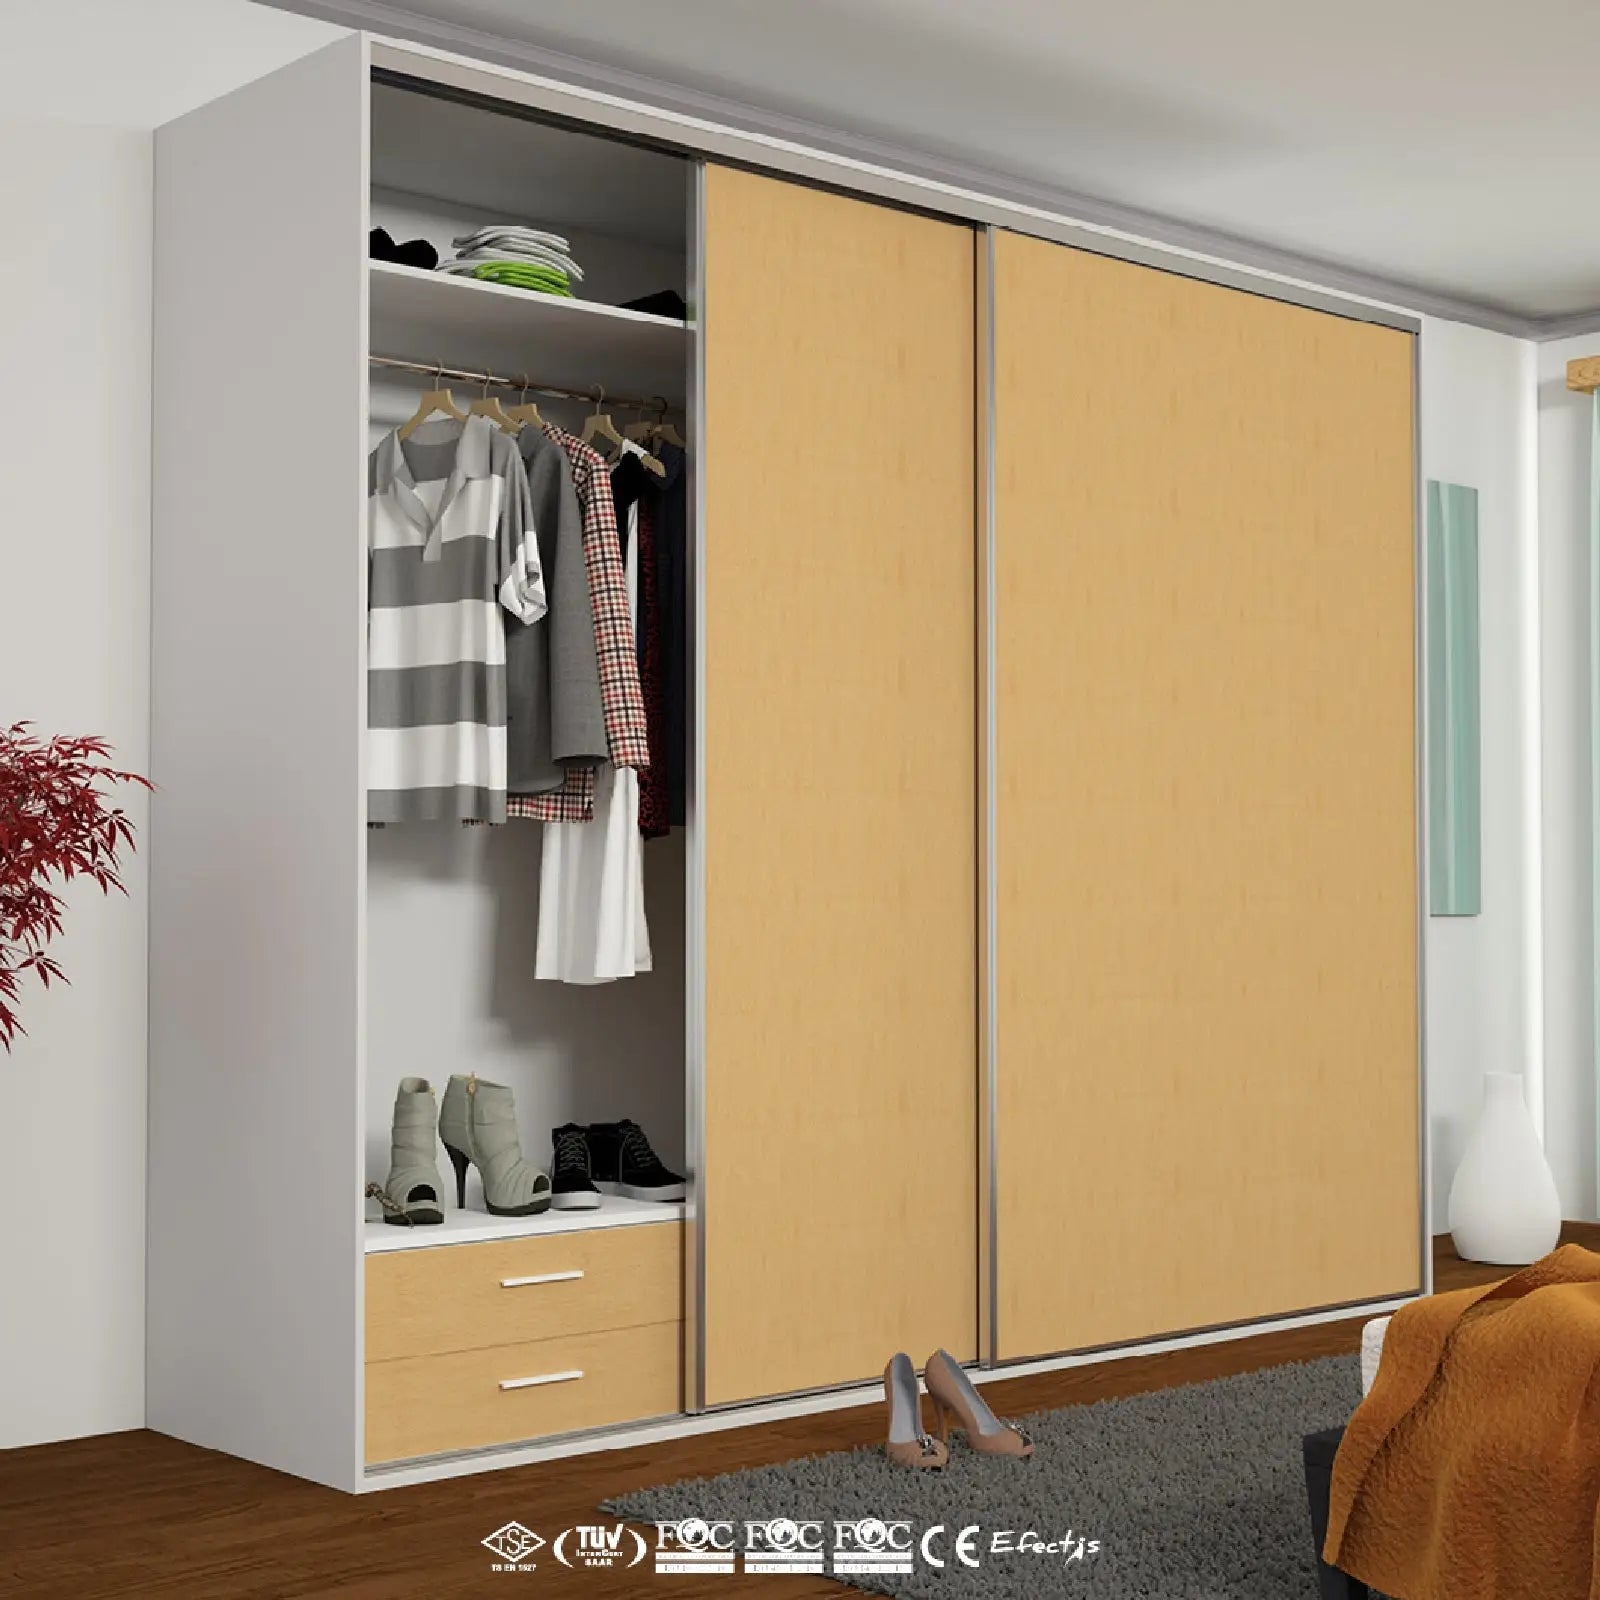 PS-Slide Sliding Door Wardrobe System - 4 Door - 4800mm Track - Both Way Soft Close - Decor And Decor